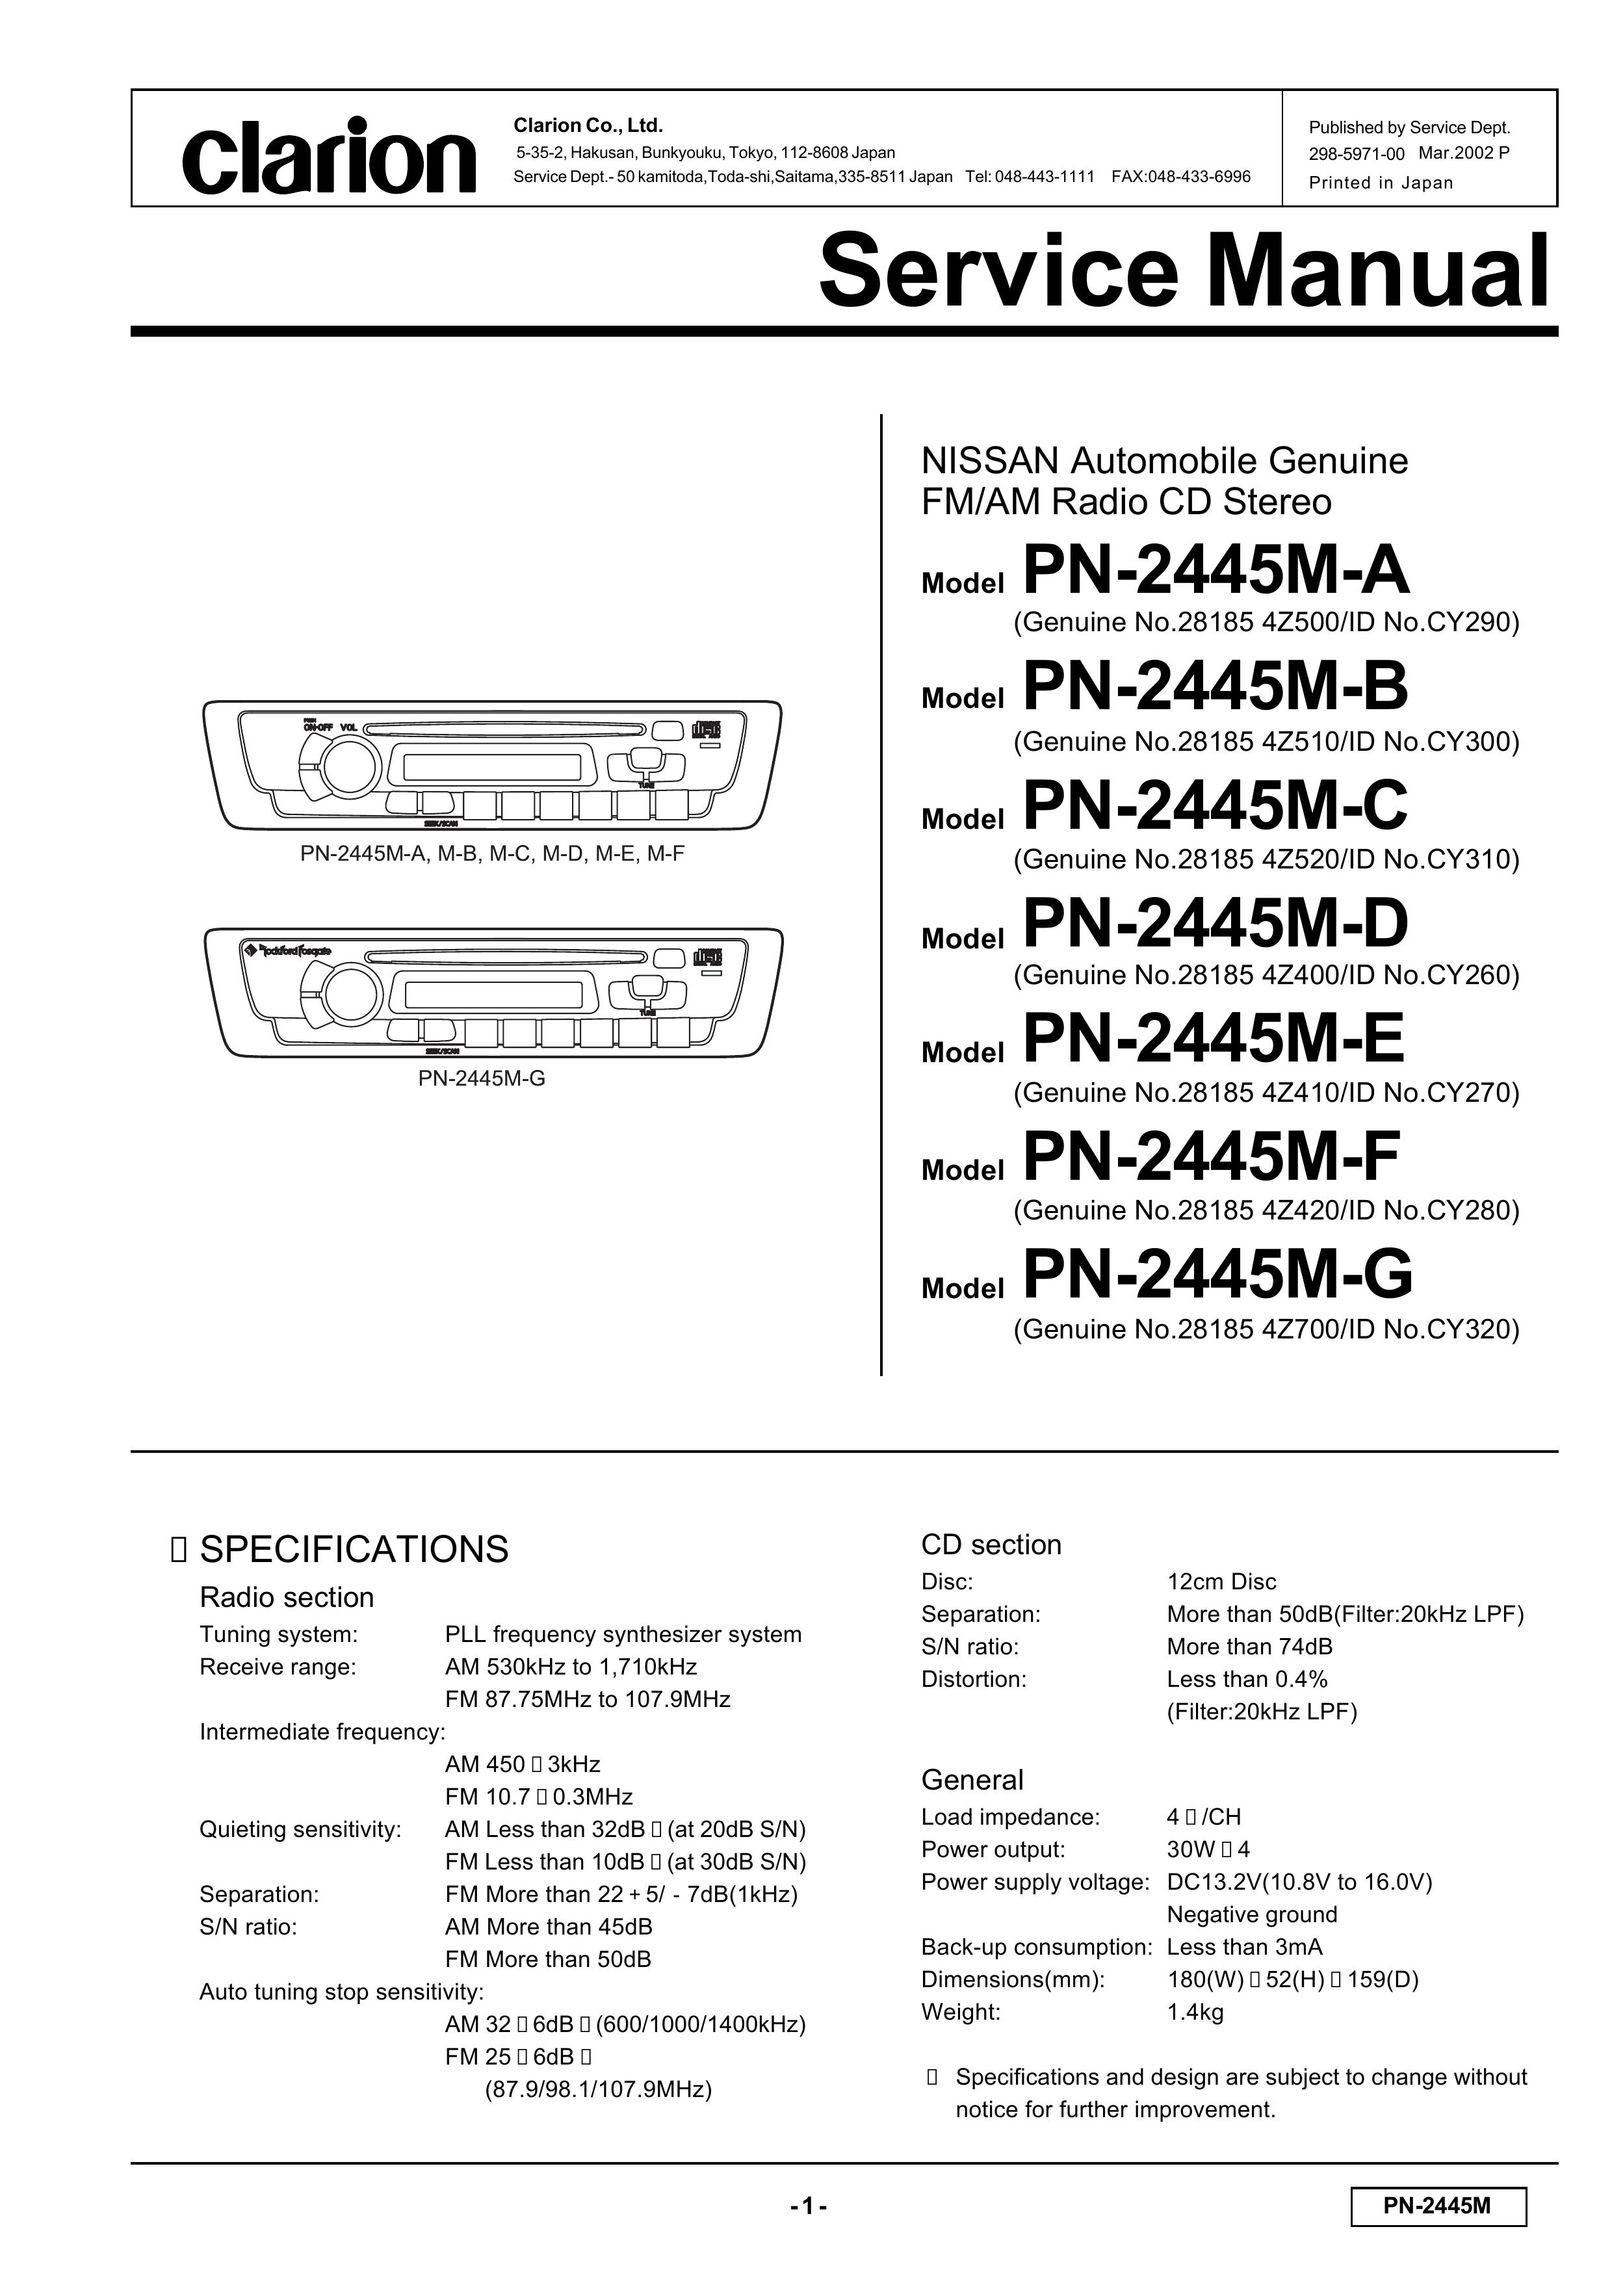 Clarion PN-2445M-B Radio User Manual